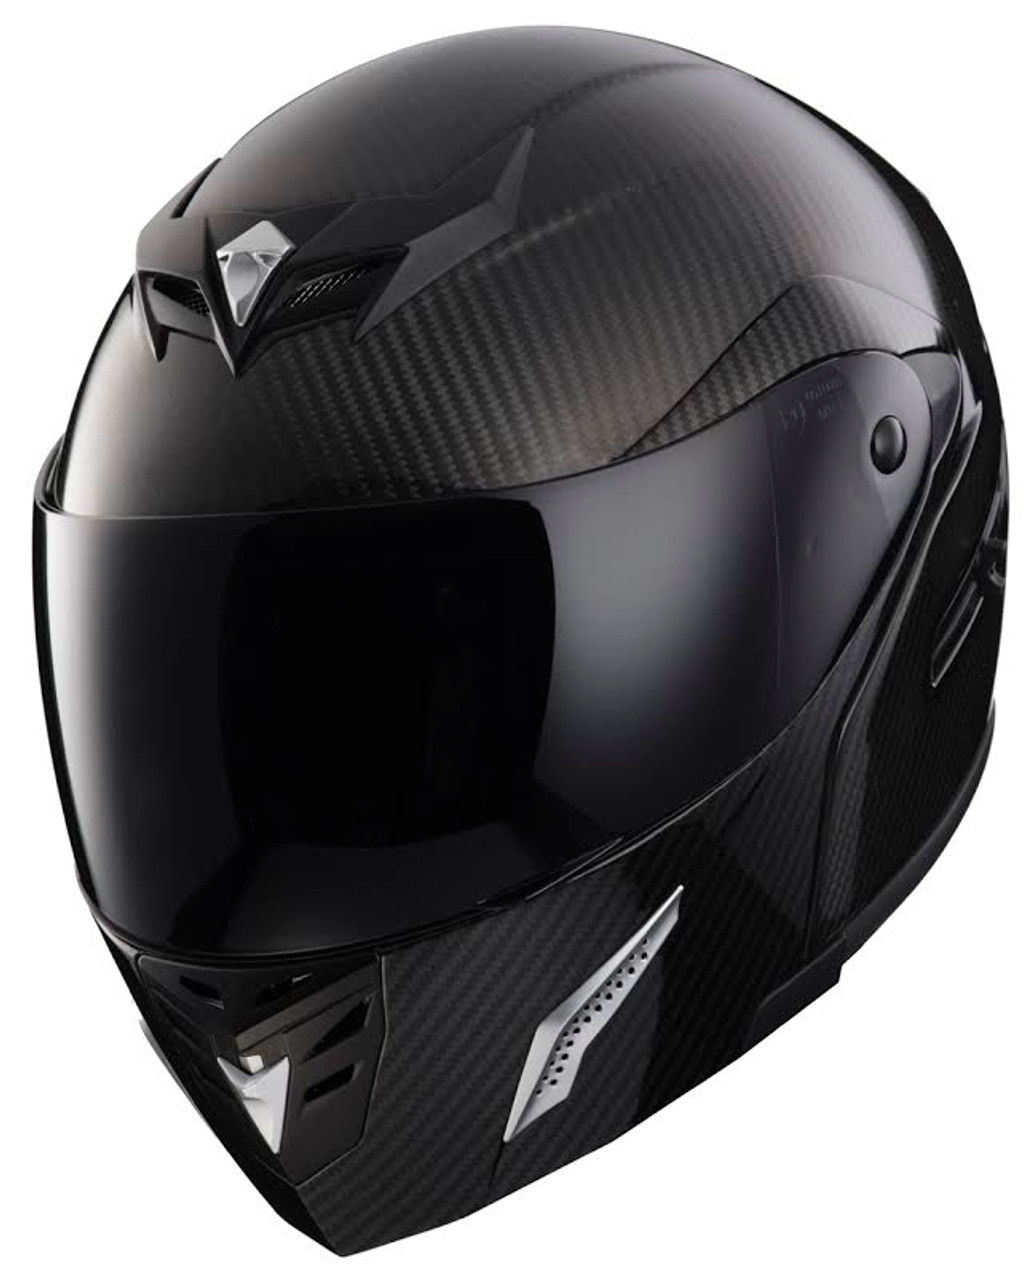 BMF-2 - Modular Full Face Carbon Fiber Motorcycle Helmet